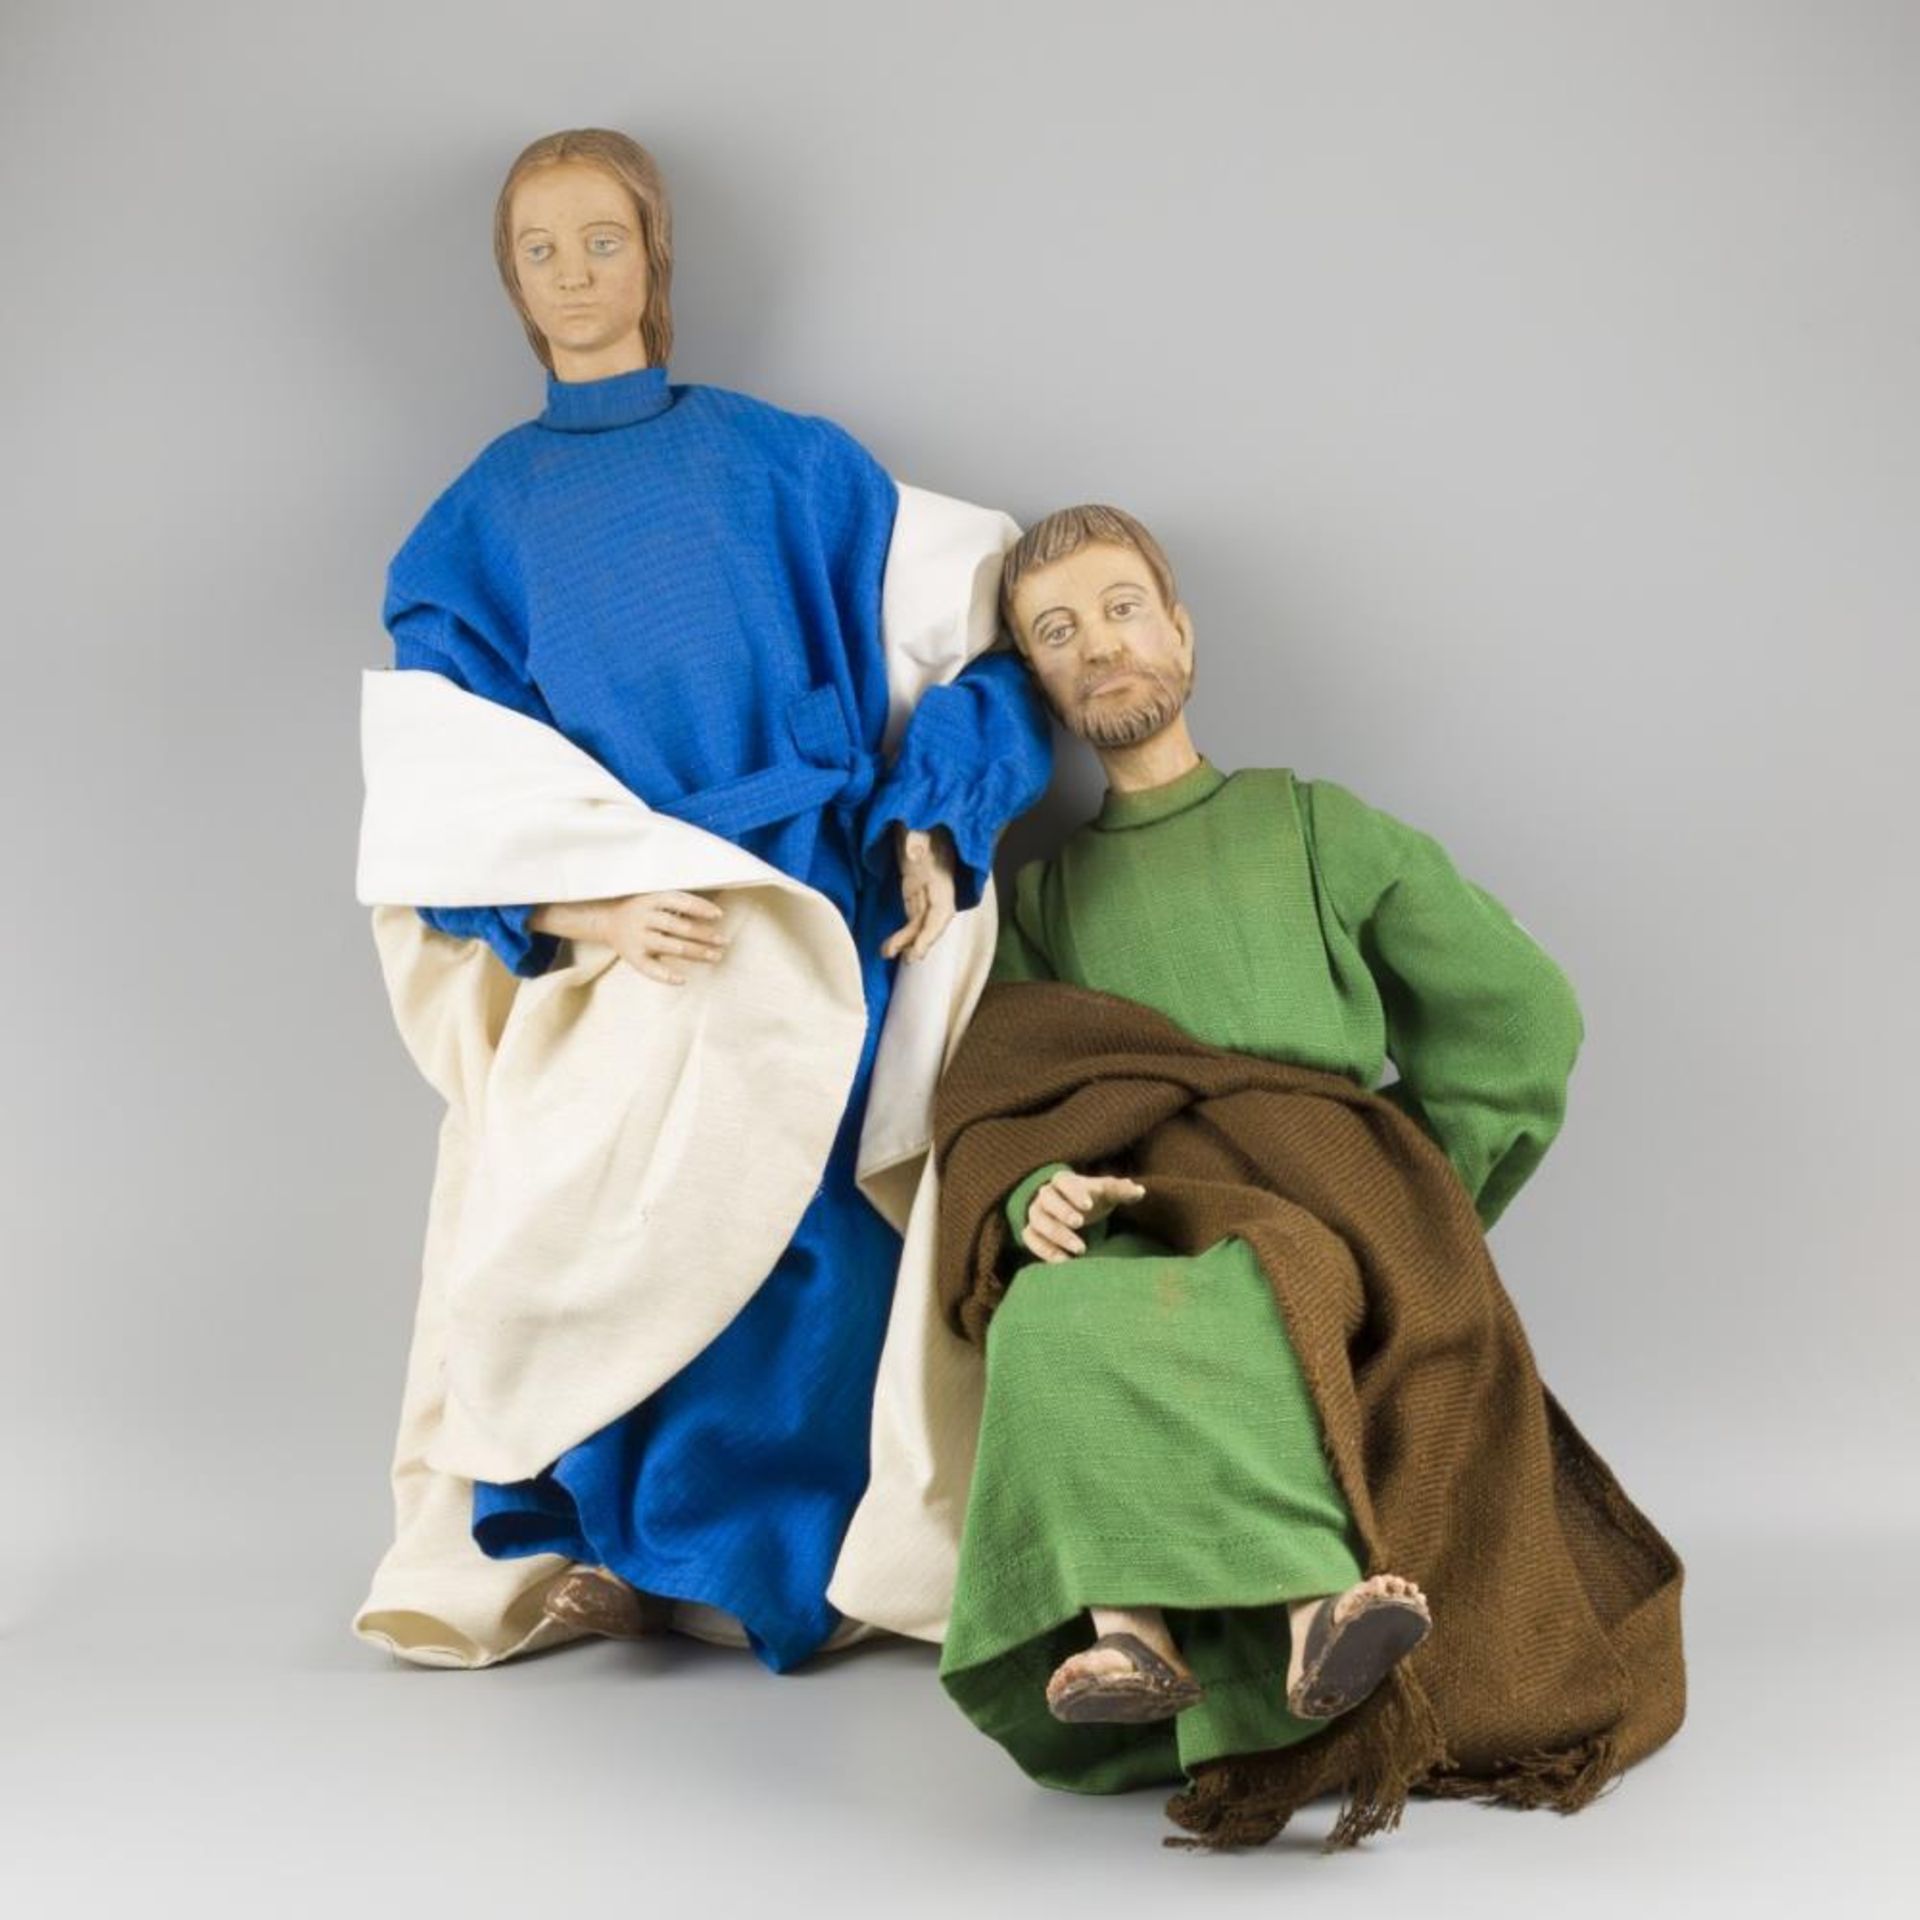 A set comprising (2) various Santons/ nativity scene figures, Joseph and Maria, Naples(?), Italy, ca